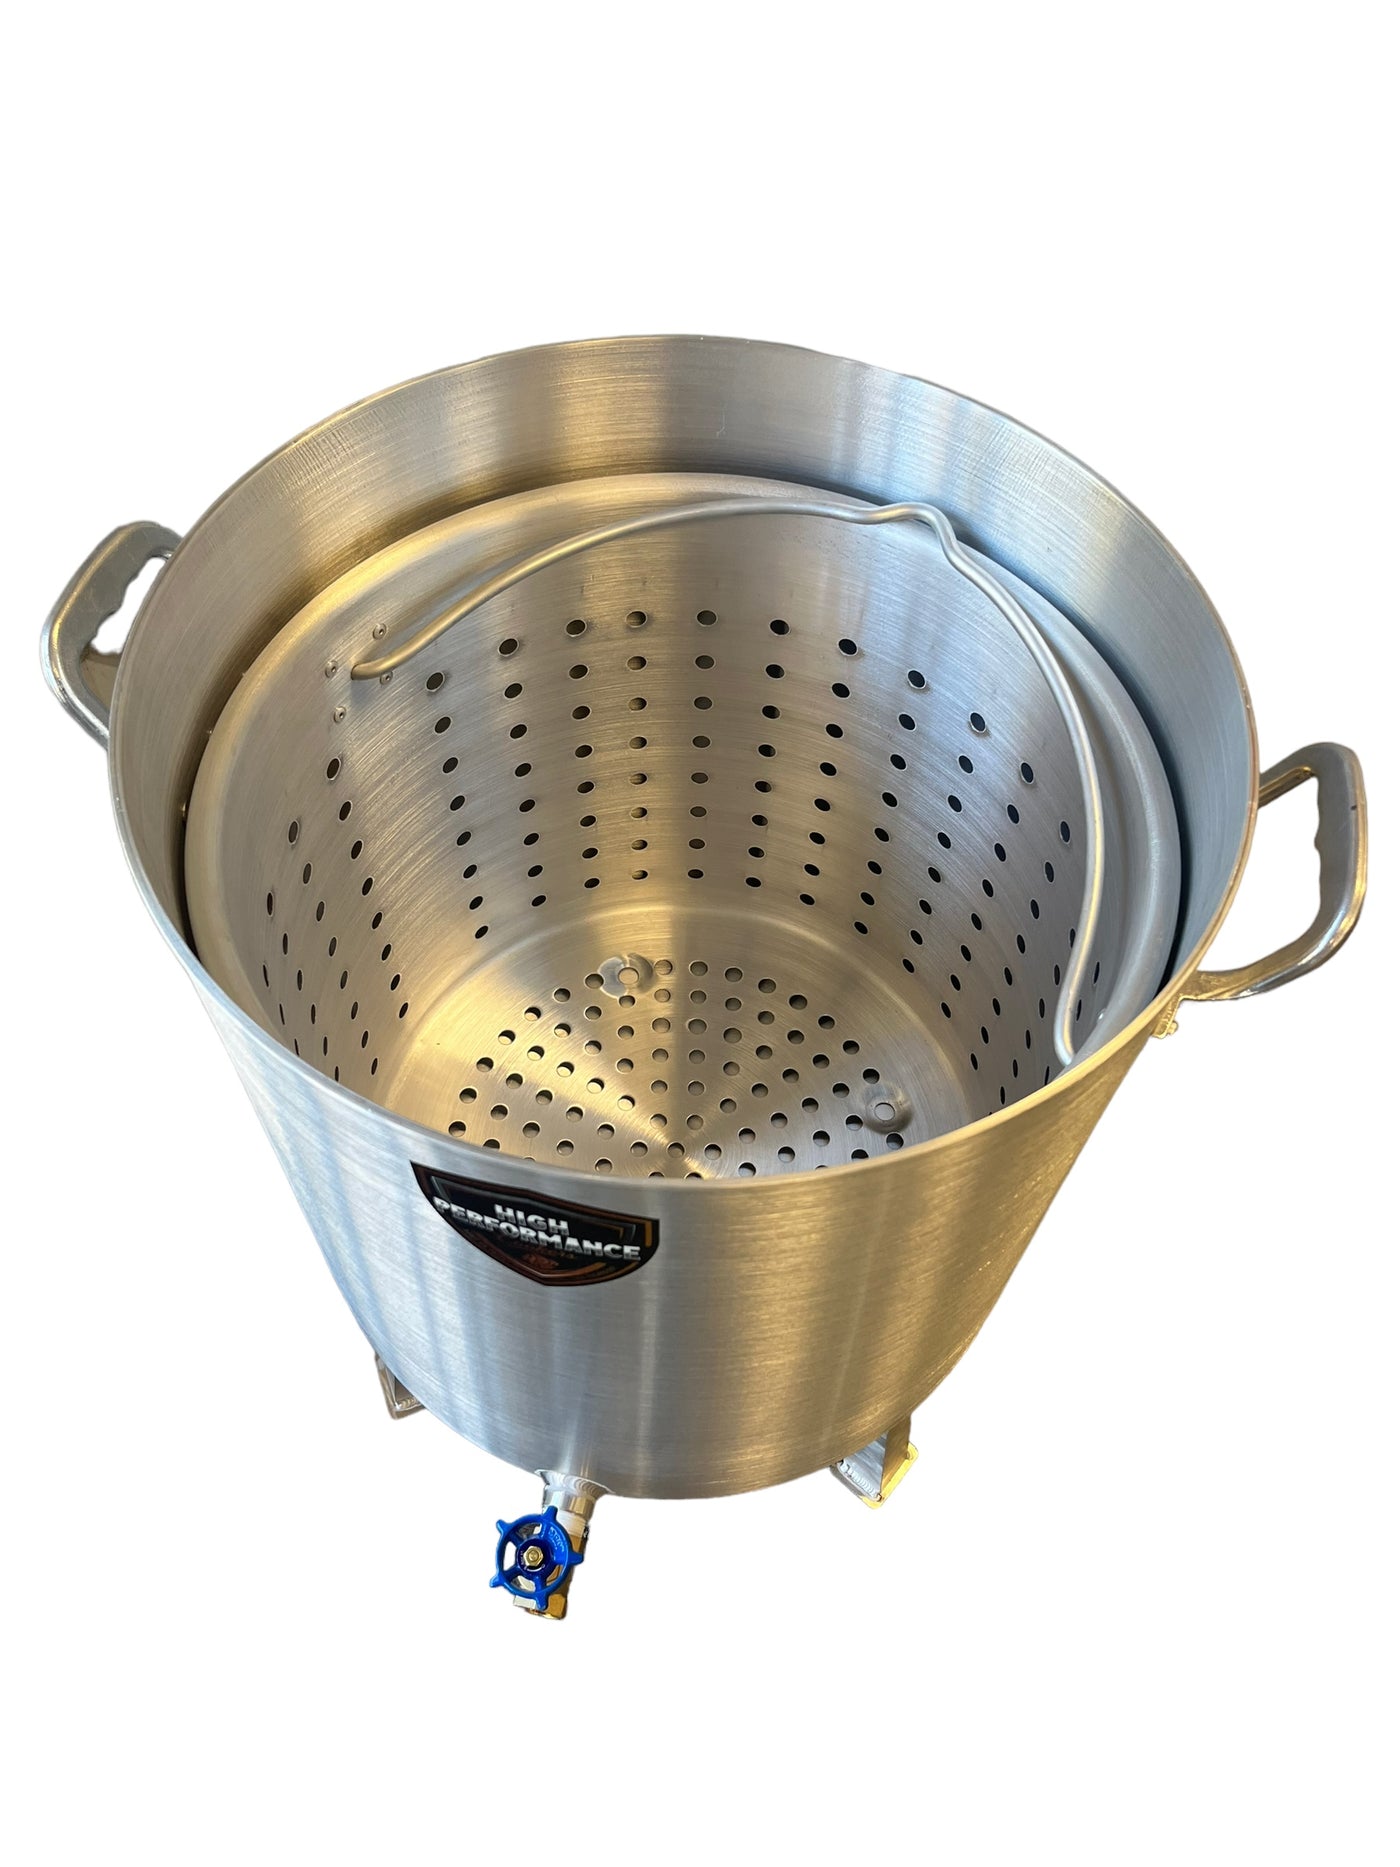 Backyard Pro 18 Qt. Aluminum Fry Pot with (2) 11 x 7 x 4 Fry Baskets